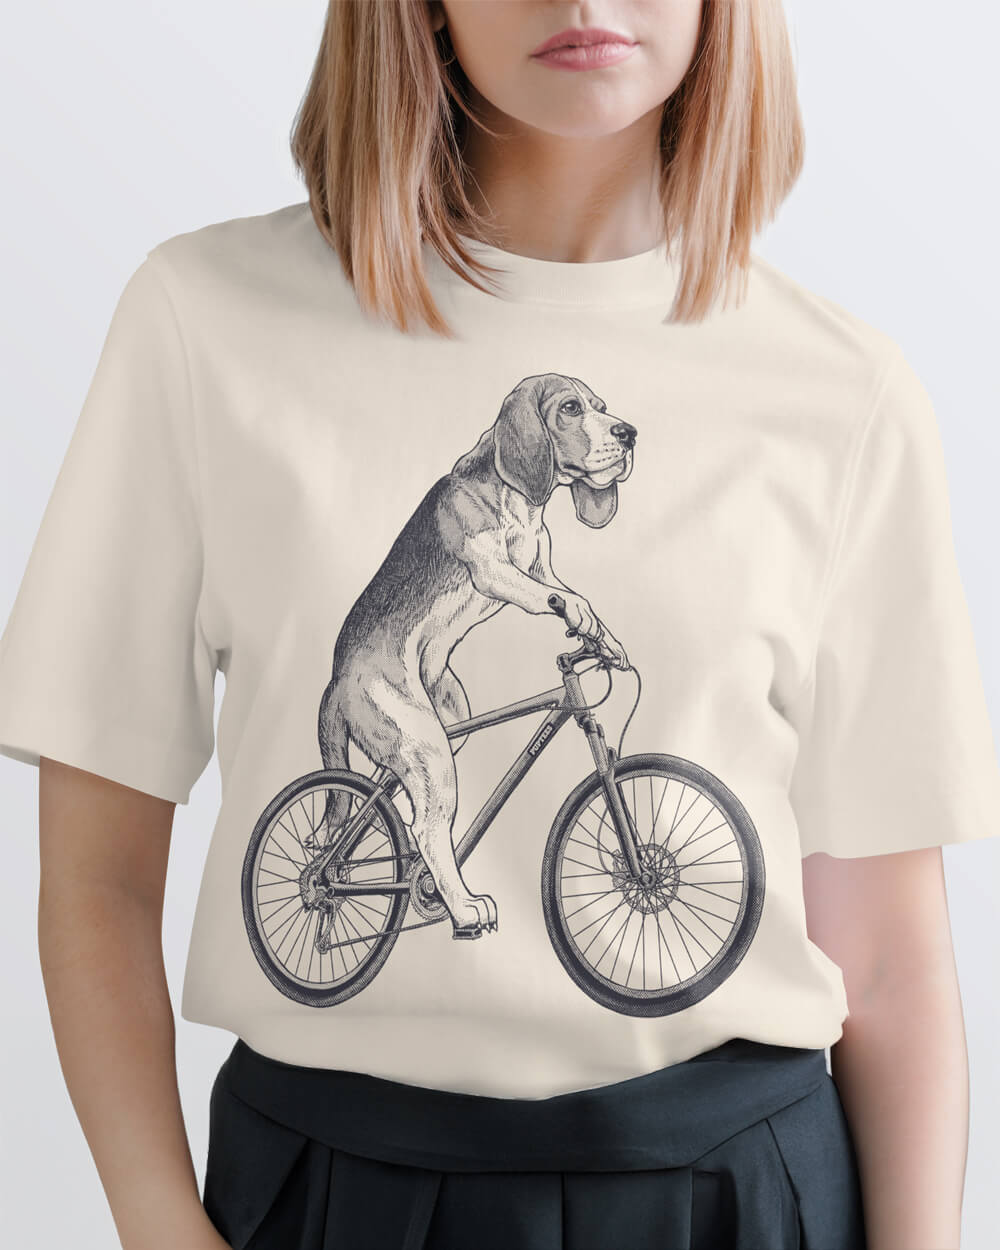 Classic Beagle dog printed graphic tee